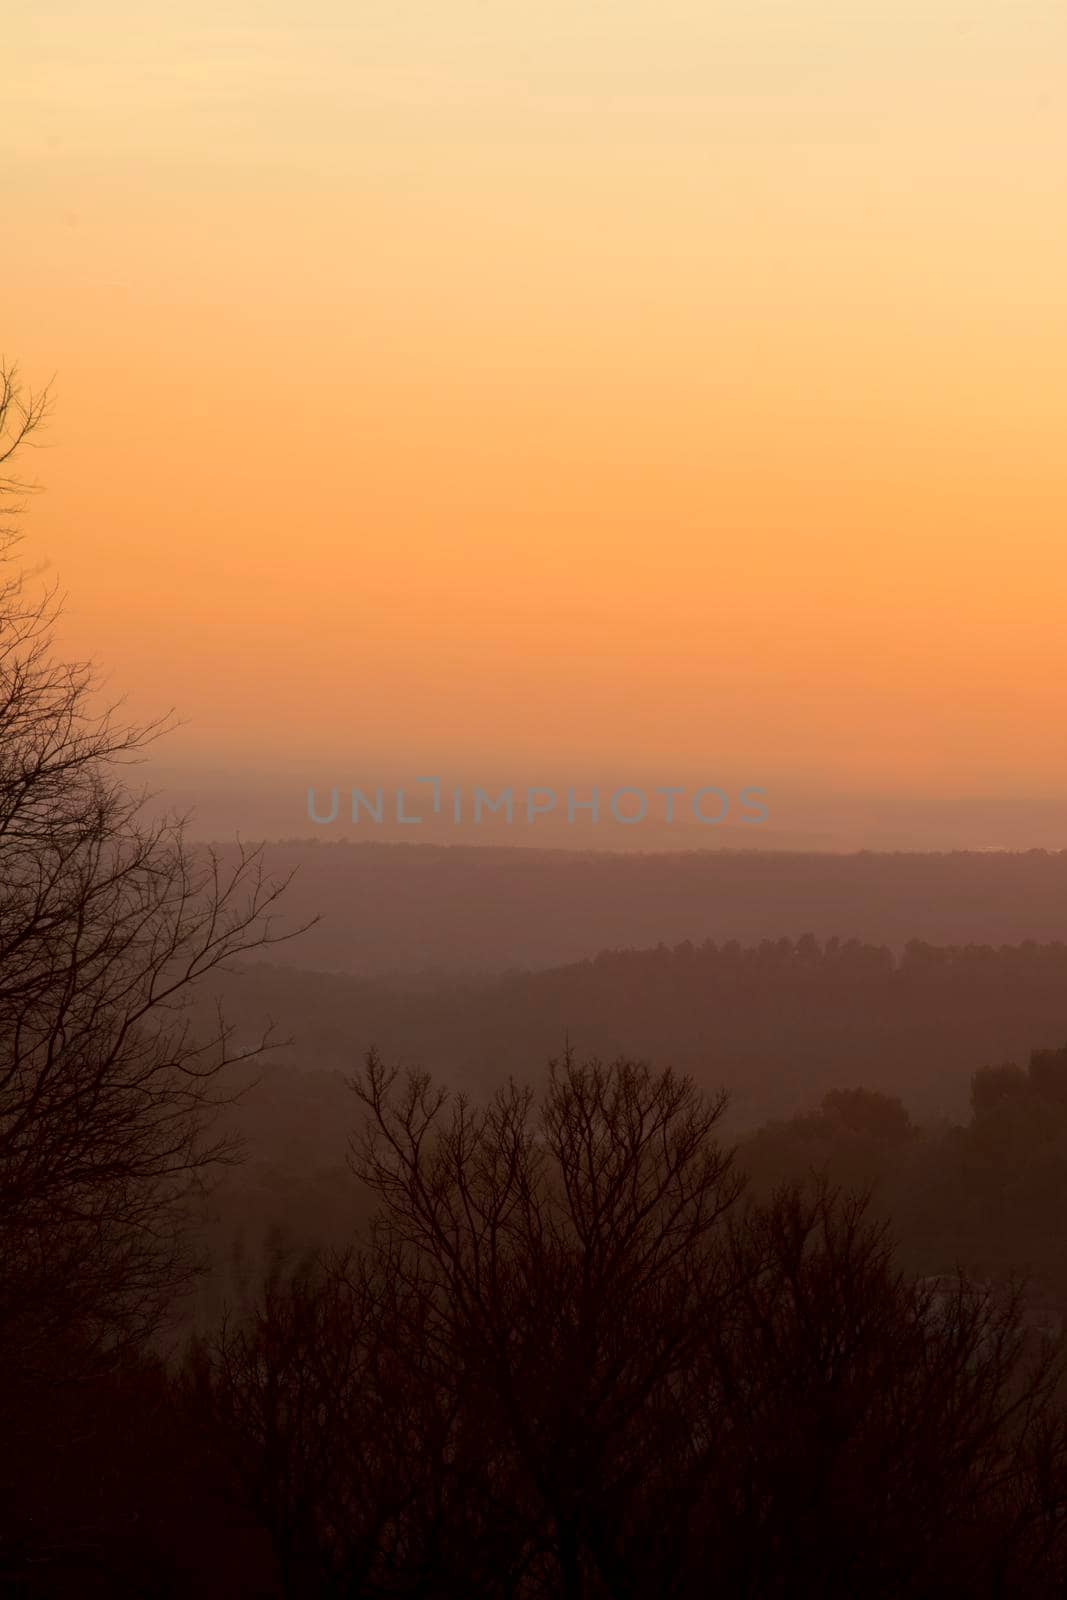 Sunset mountainous orange landscape by ValentimePix